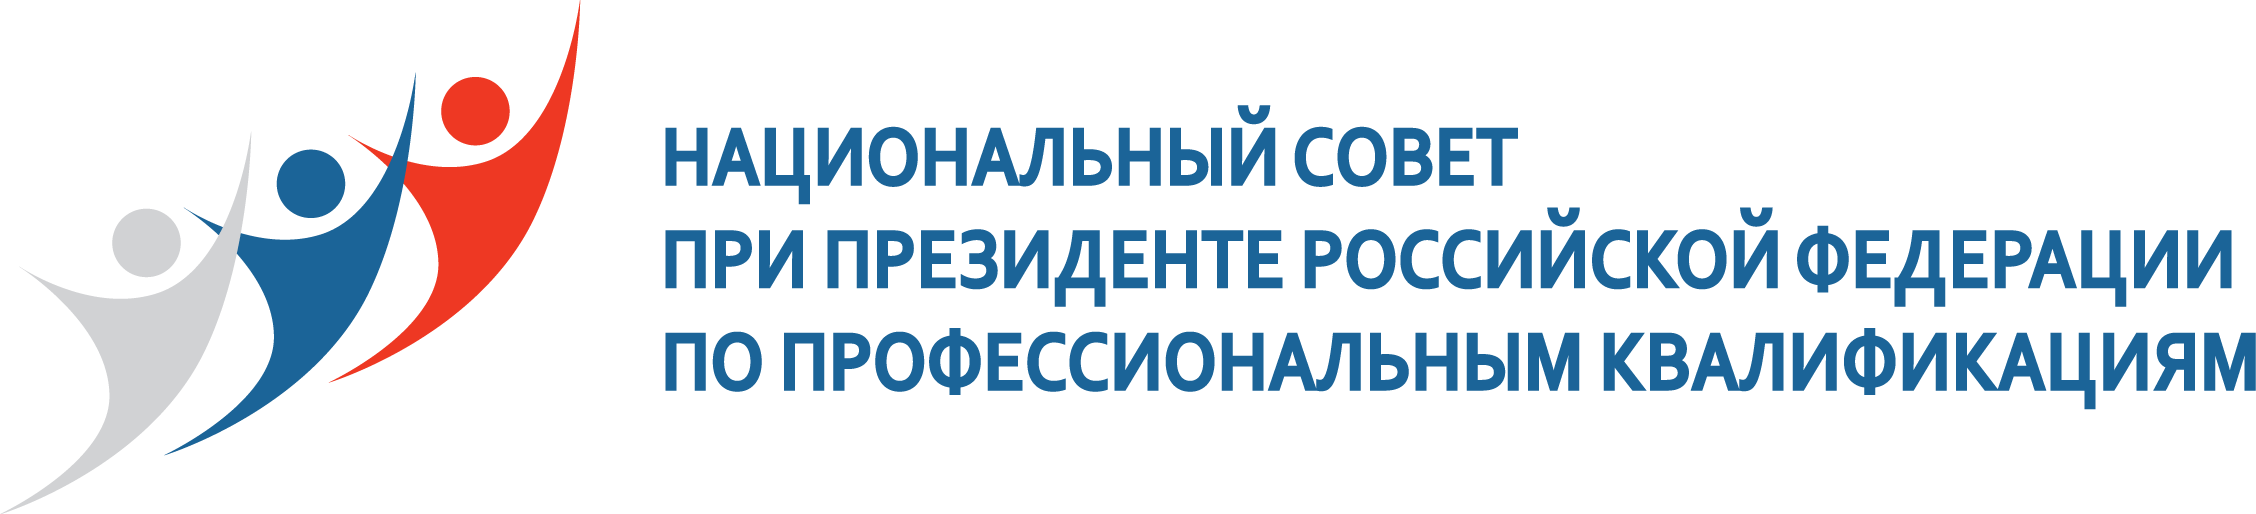 nspk logo rus raster